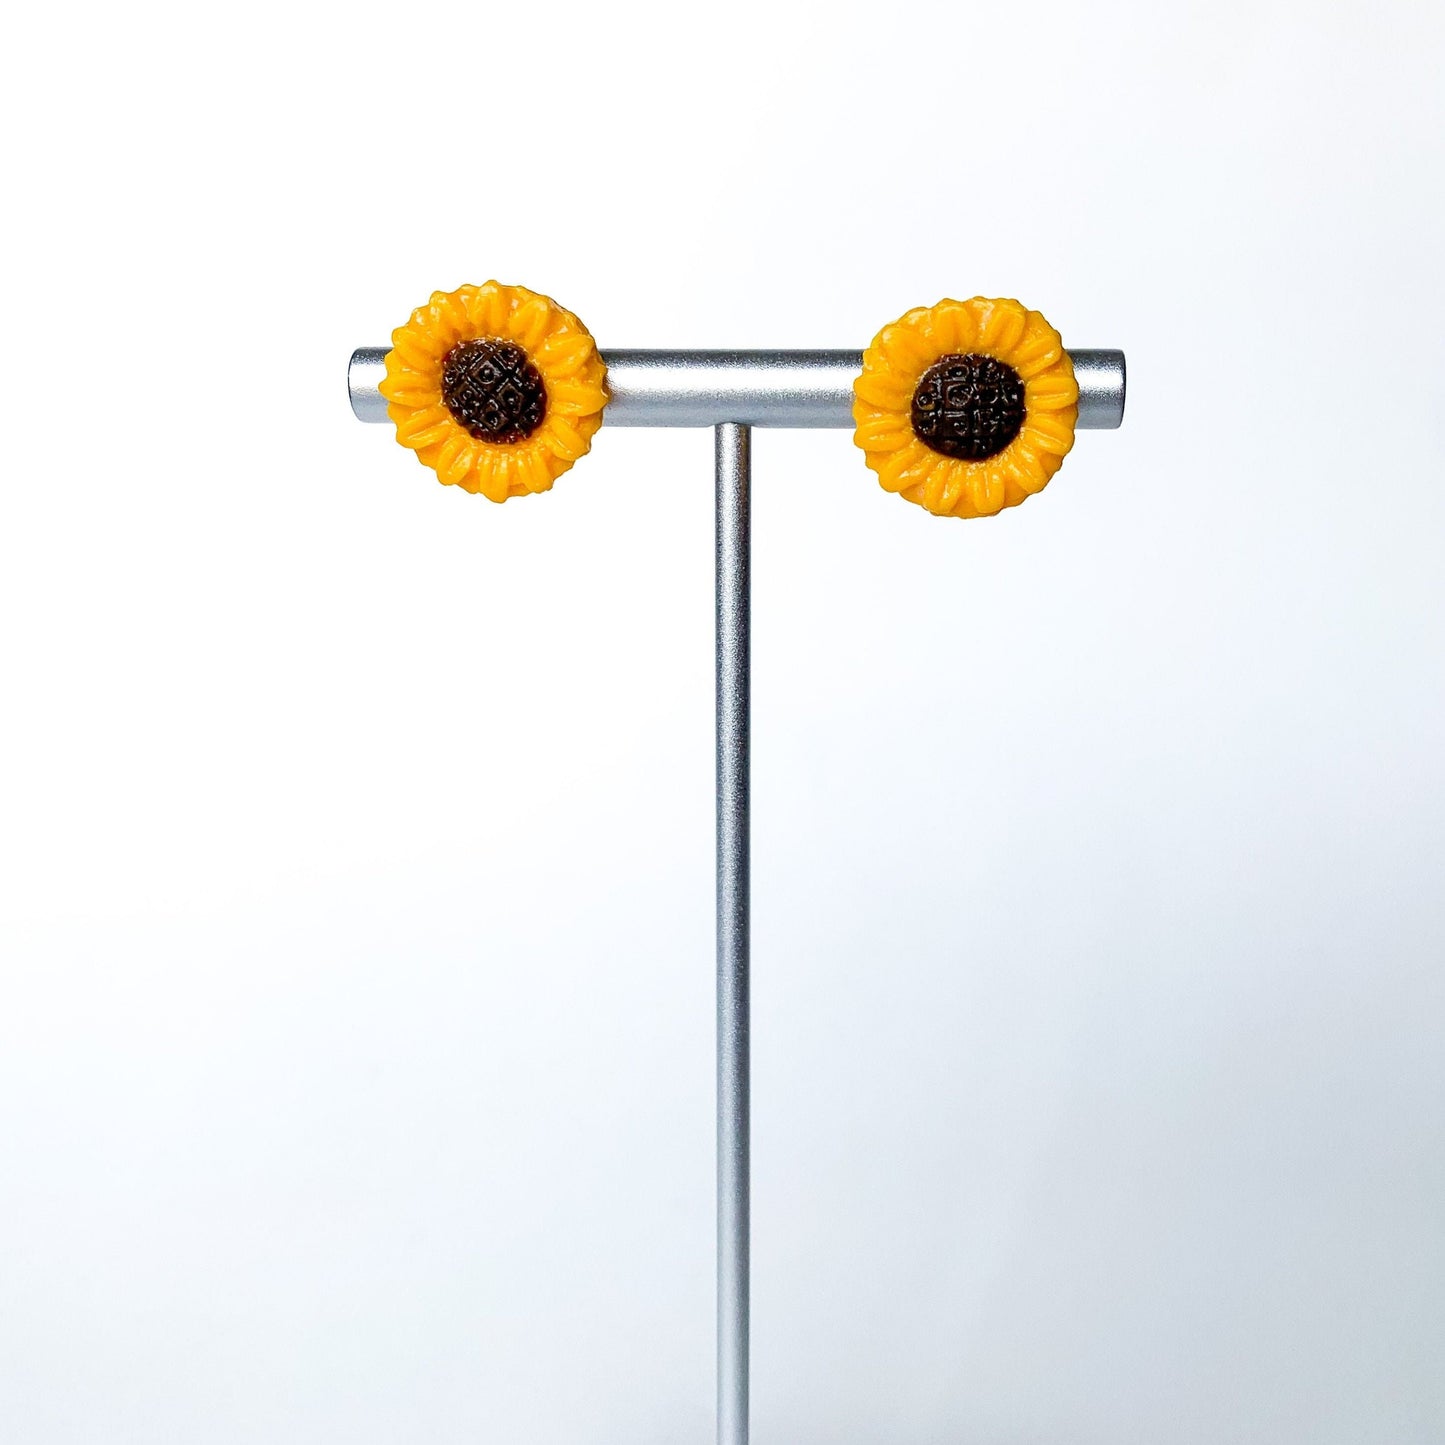 Sunflower Studs